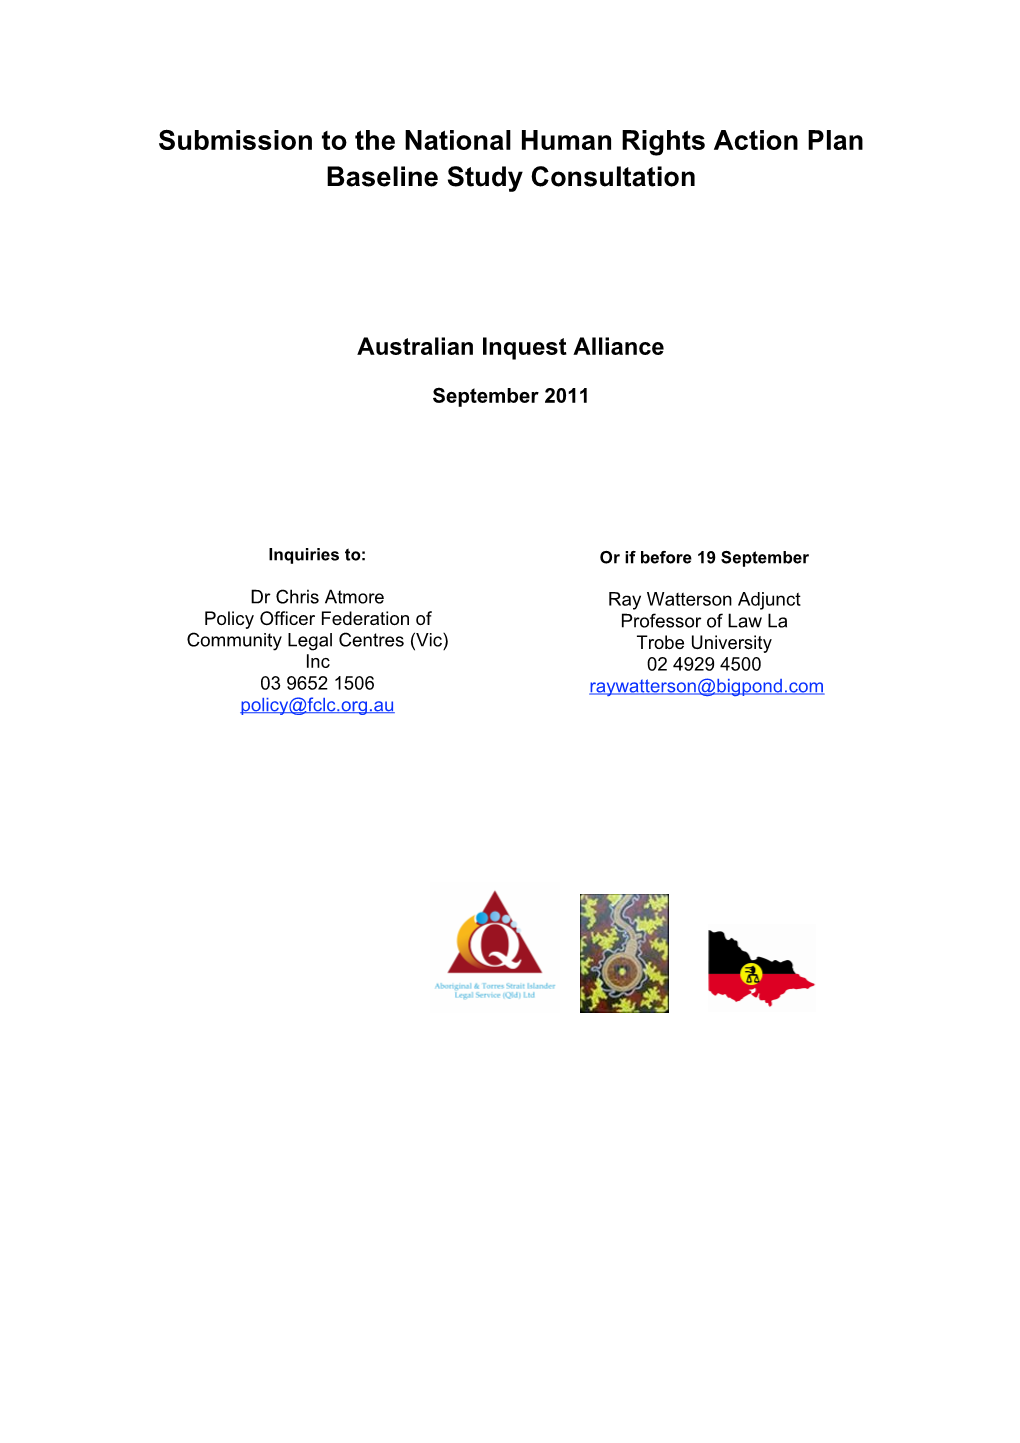 Australian Inquest Alliance